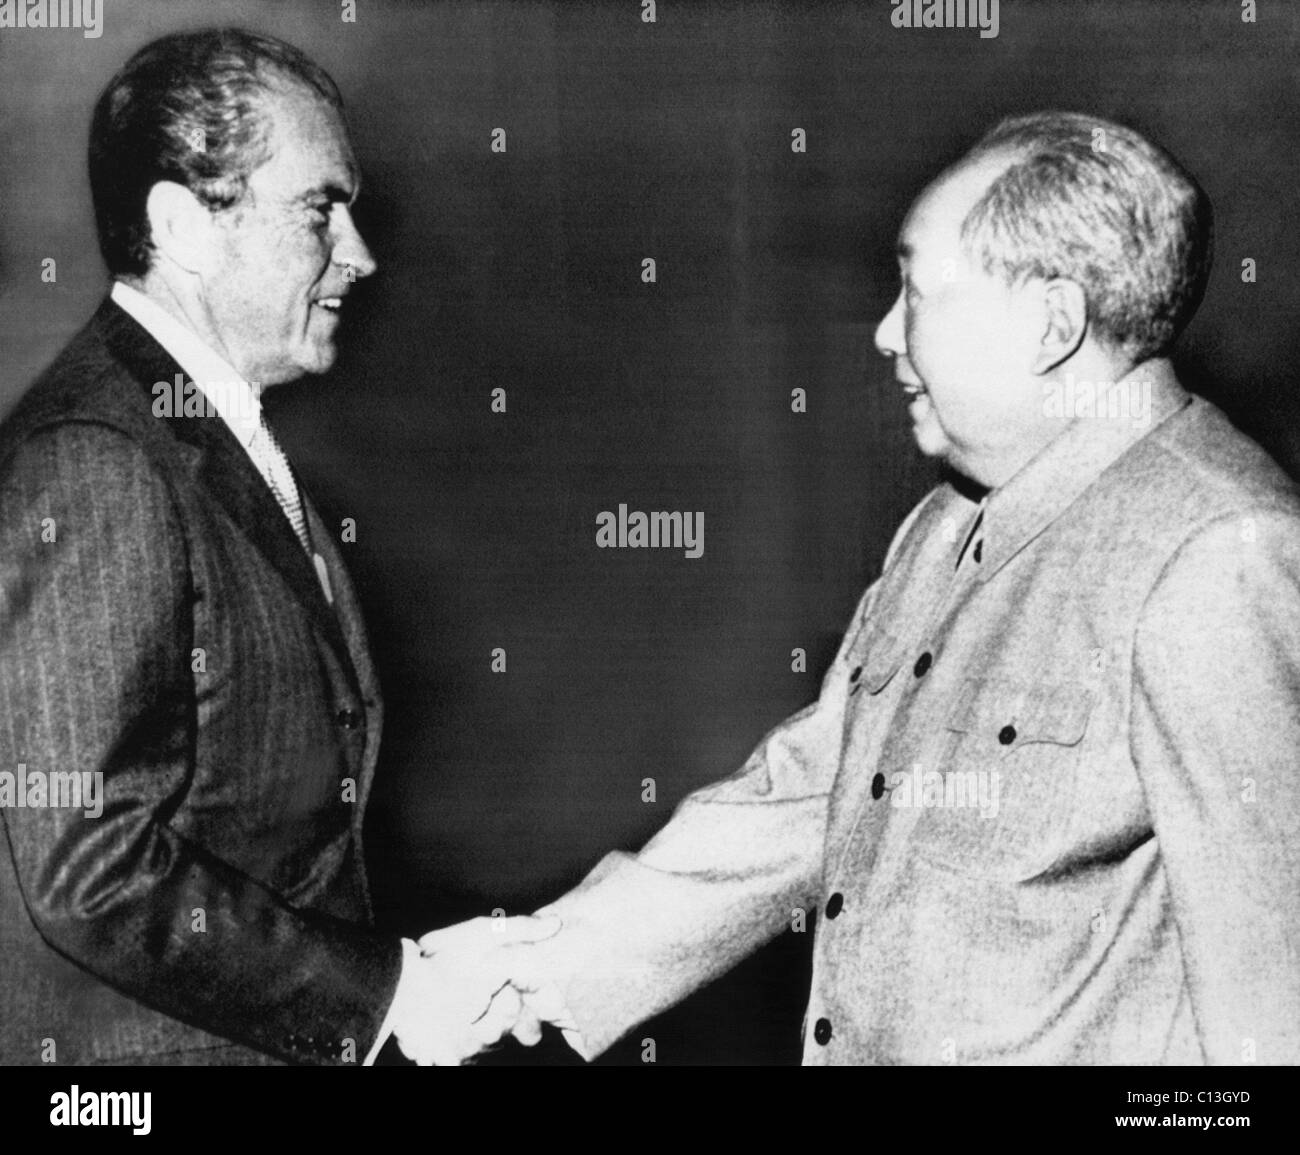 1972-us-presidency-president-richard-nixon-meeting-with-chairman-mao-C13GYD.jpg